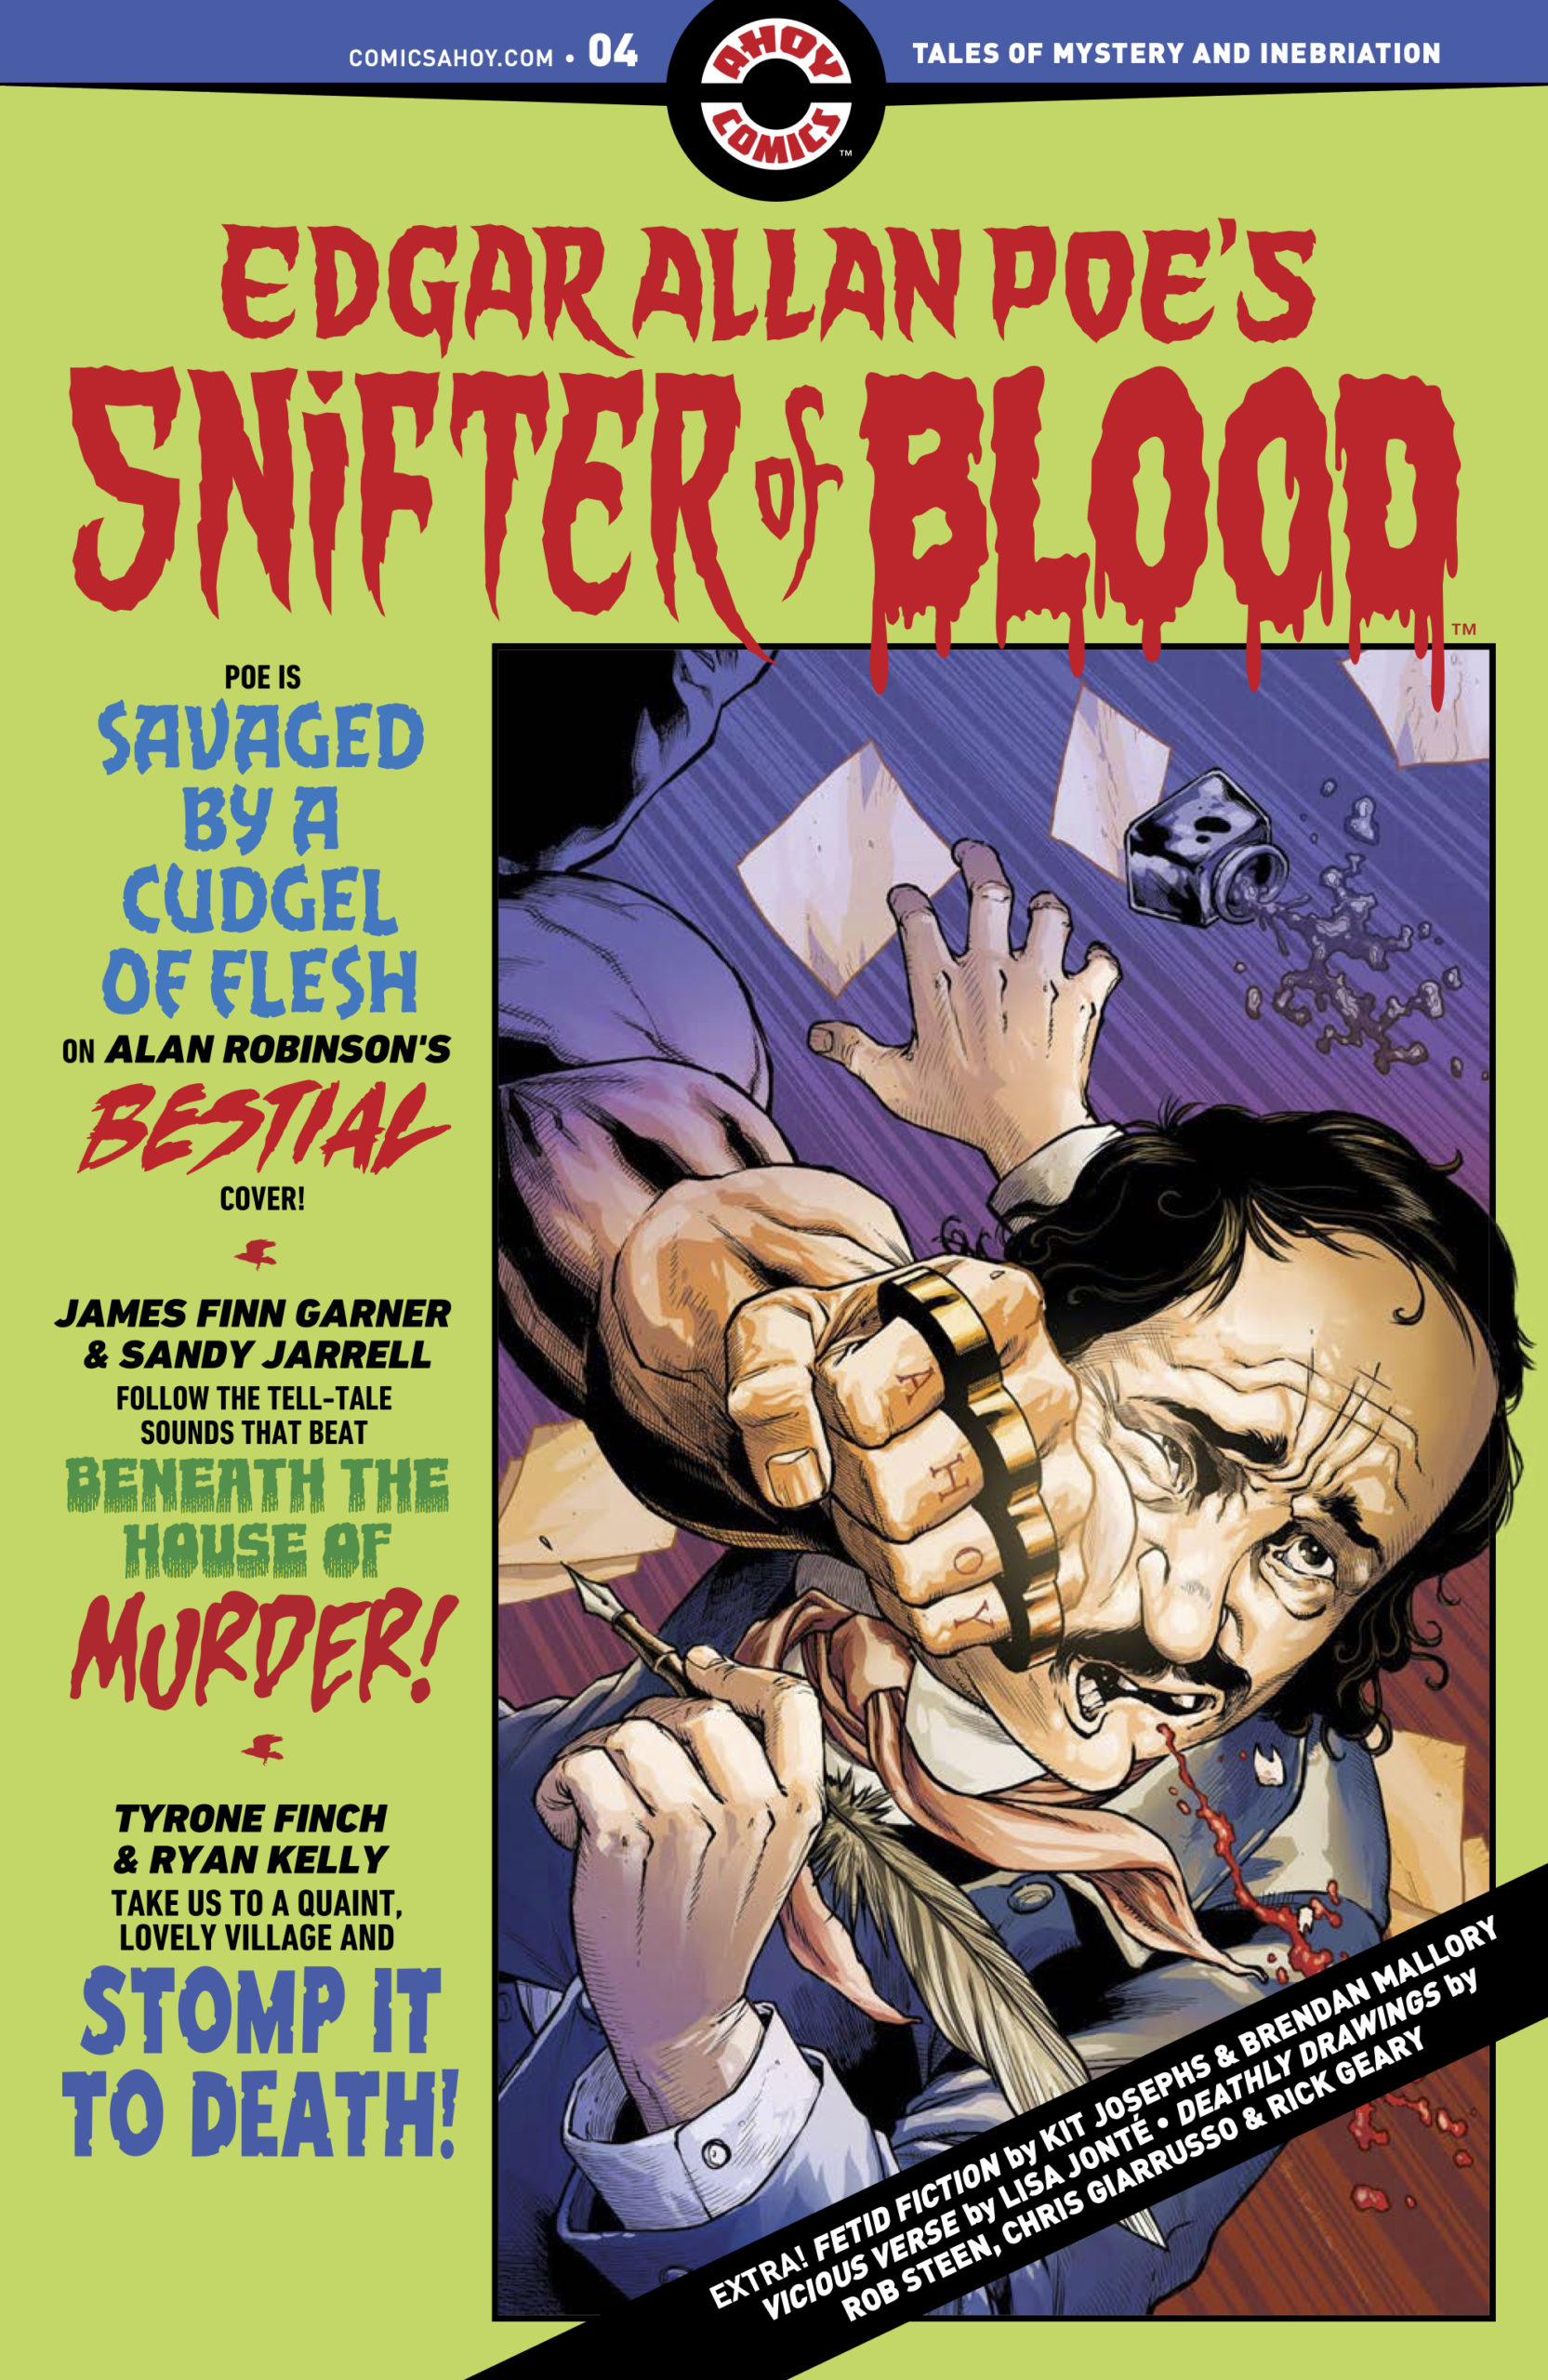 Edgar Allan Poe's Snifter of Blood #4 Cover DC Comics News